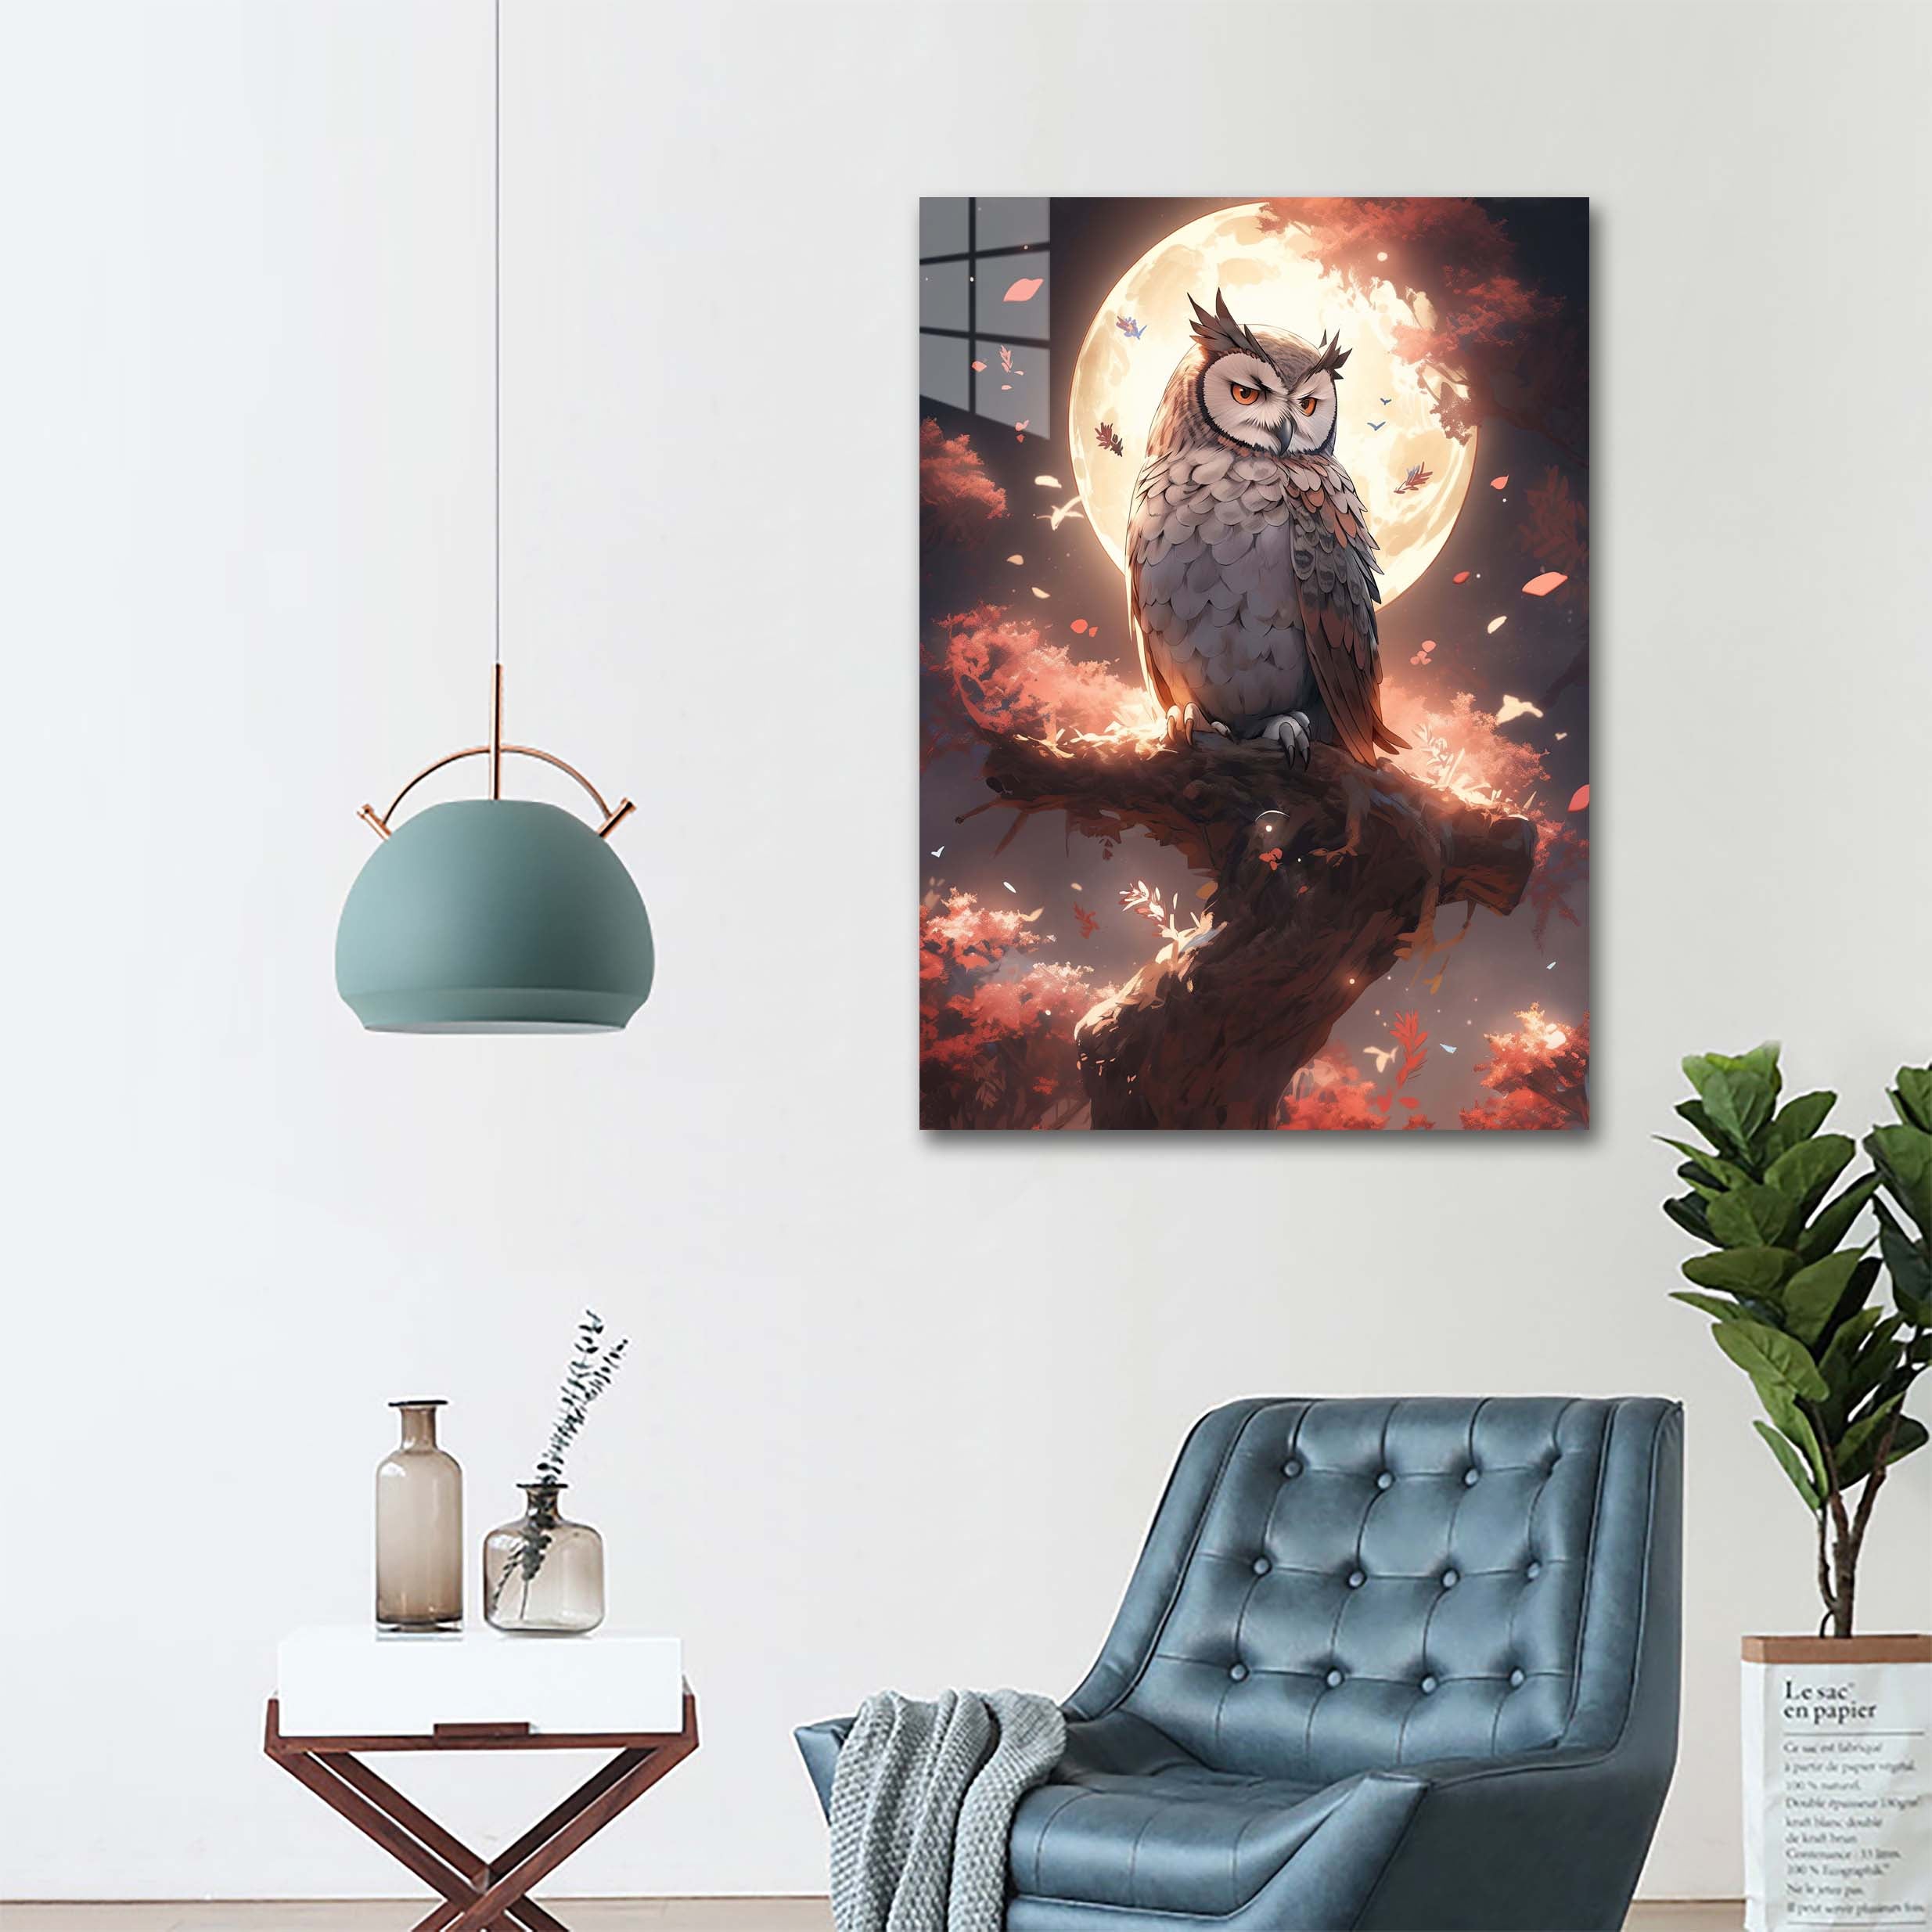 Owl Moon-designed by @Destinctivart